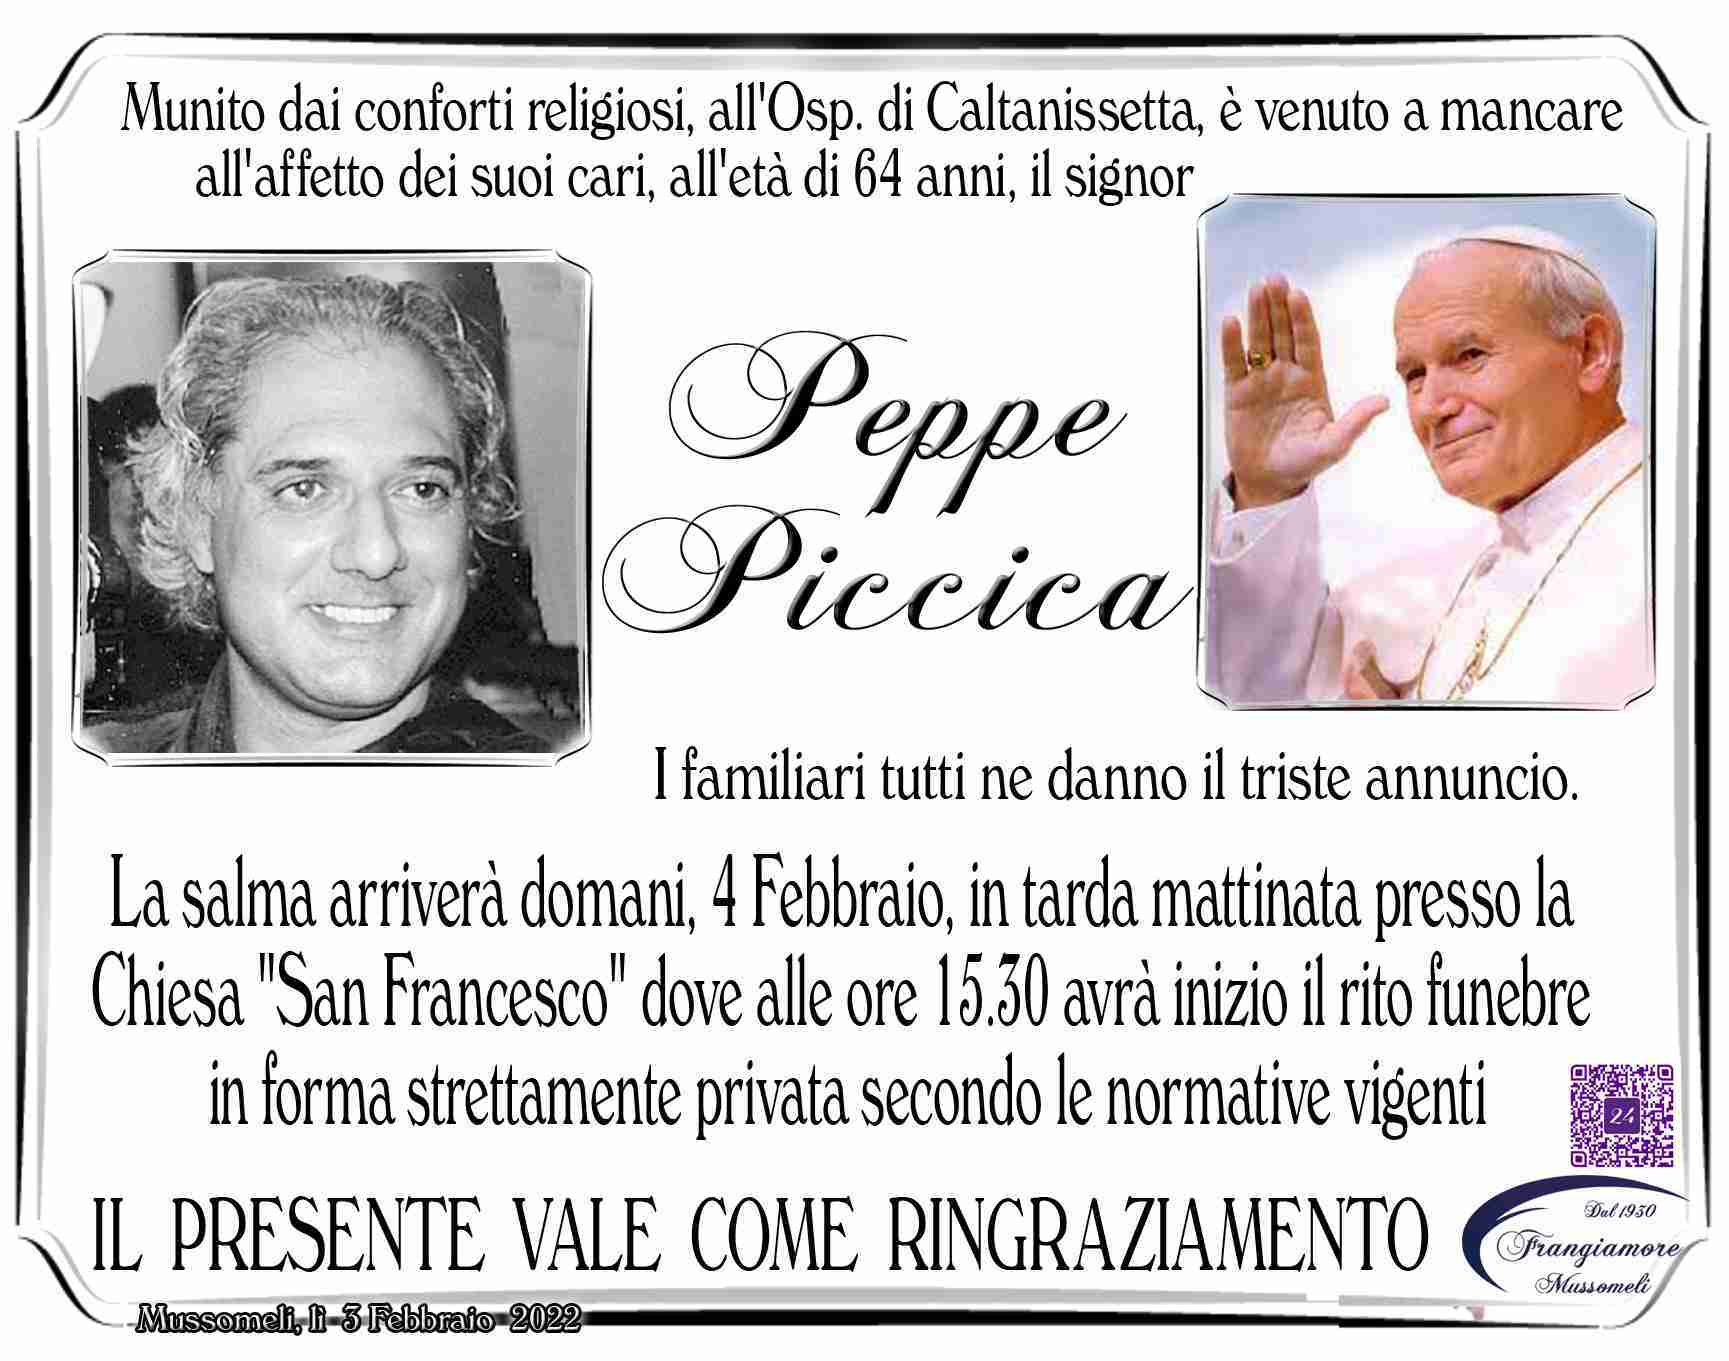 Peppe Piccica